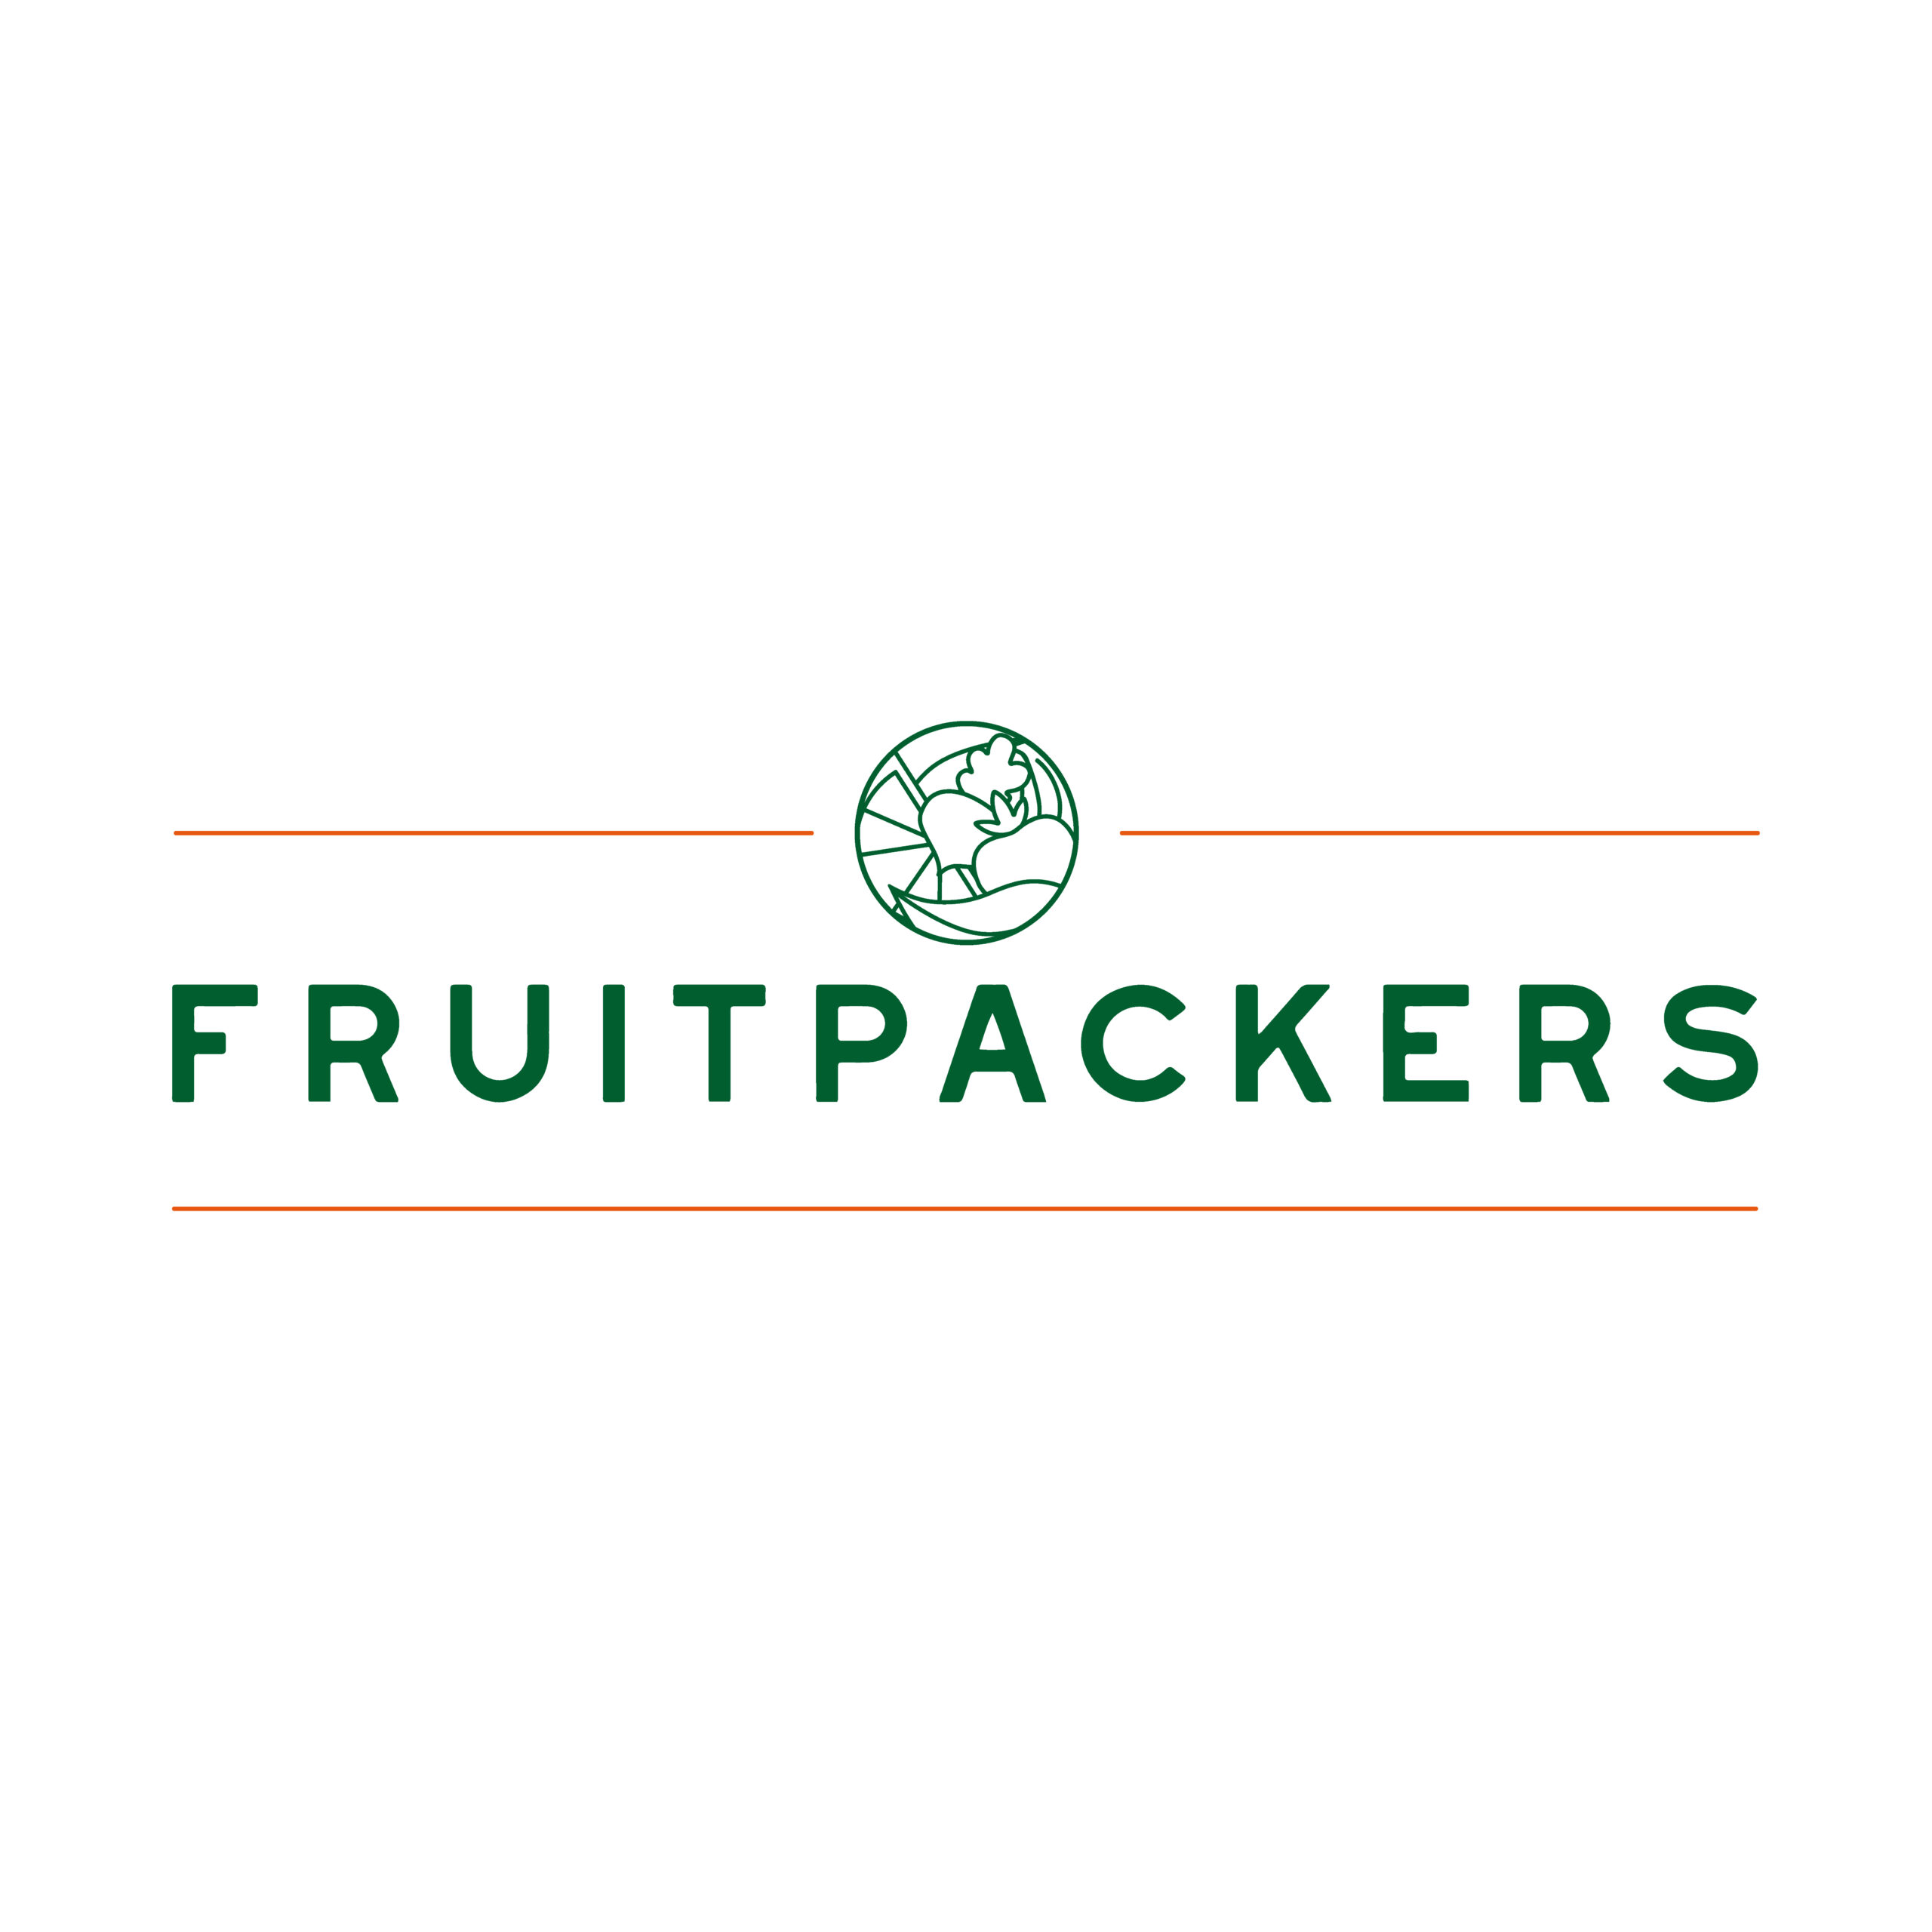 Fruitpackers_full logo_orange